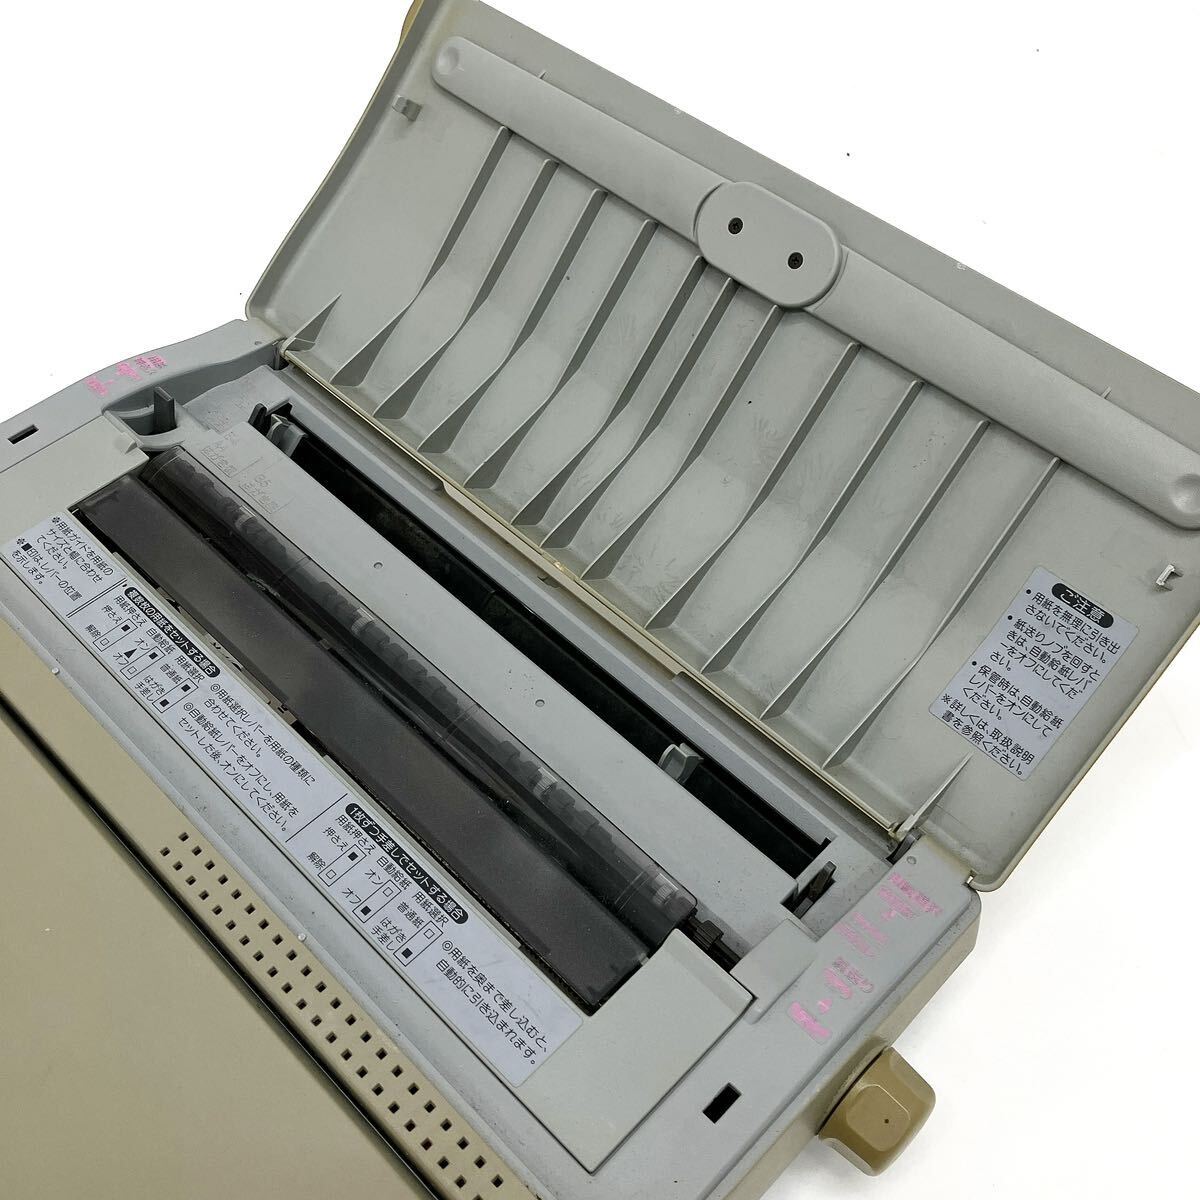  operation goods SHARP sharp paper .WD-C10 Japanese word processor word-processor color liquid crystal alp rock 0411